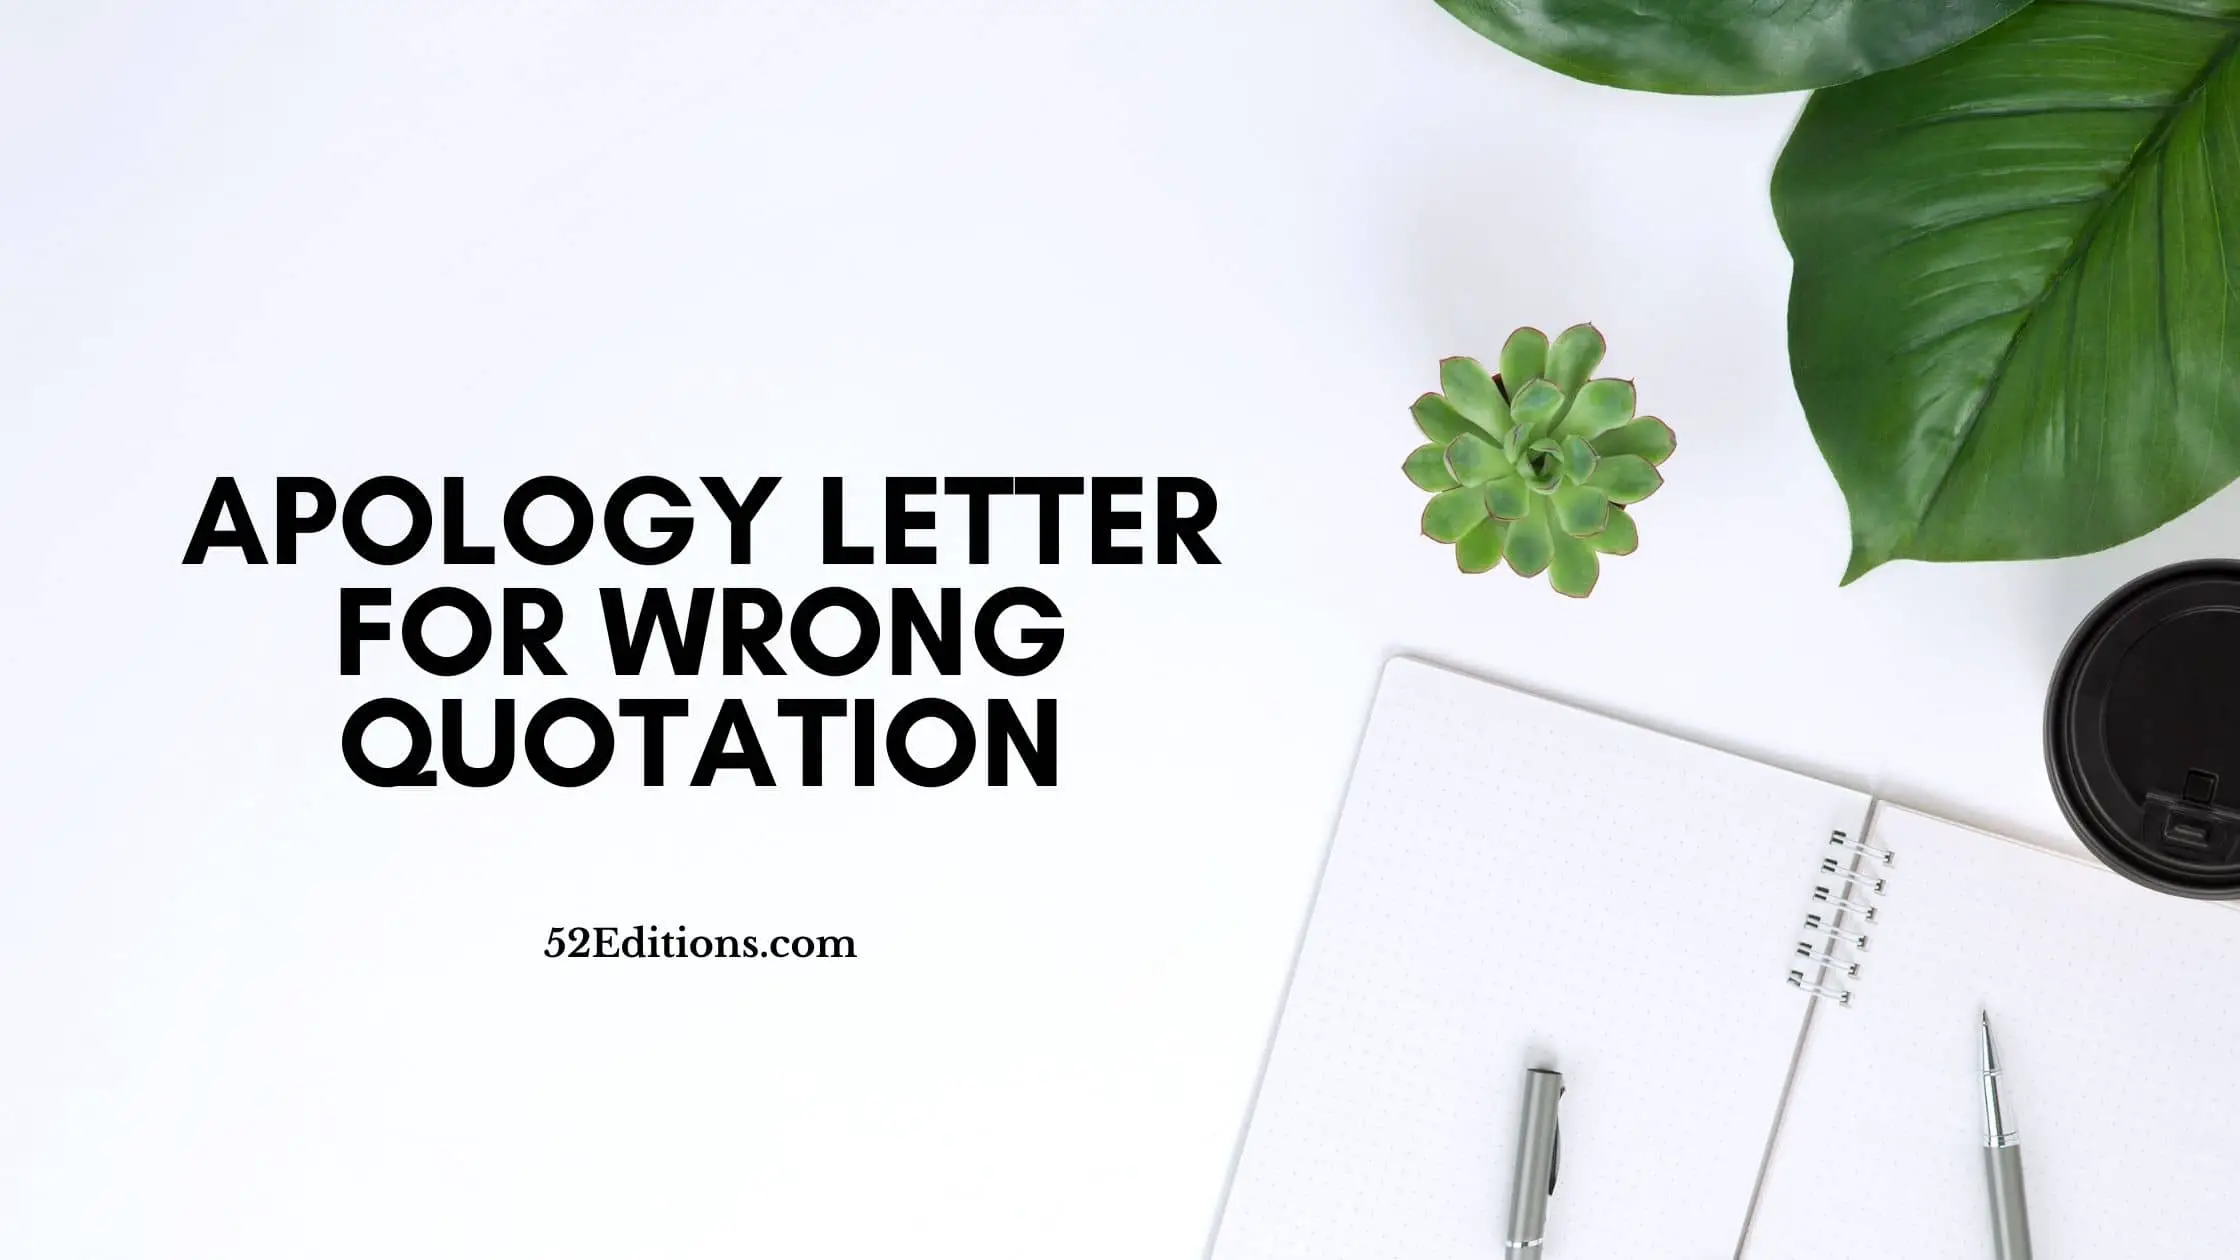 For letter misunderstanding apology professional Apology Letter